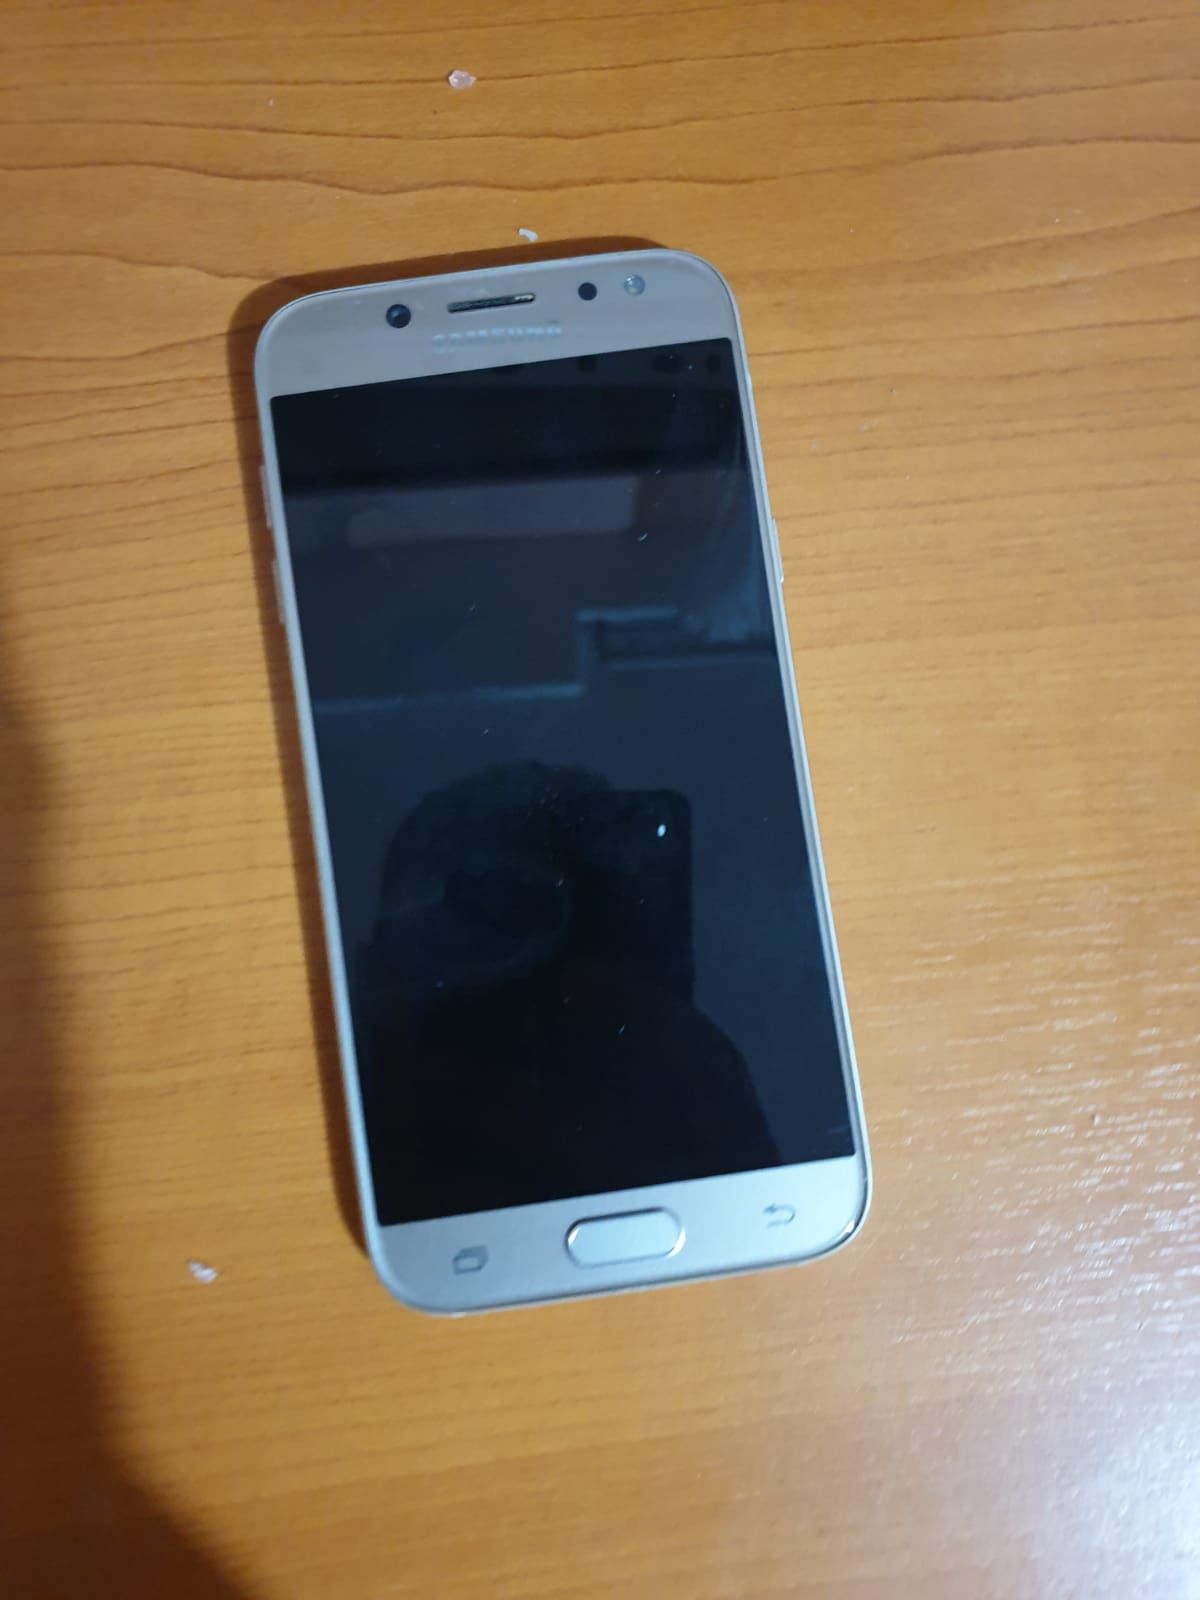 Samsung galaxy j7 pro,dual sim,64gb,gold